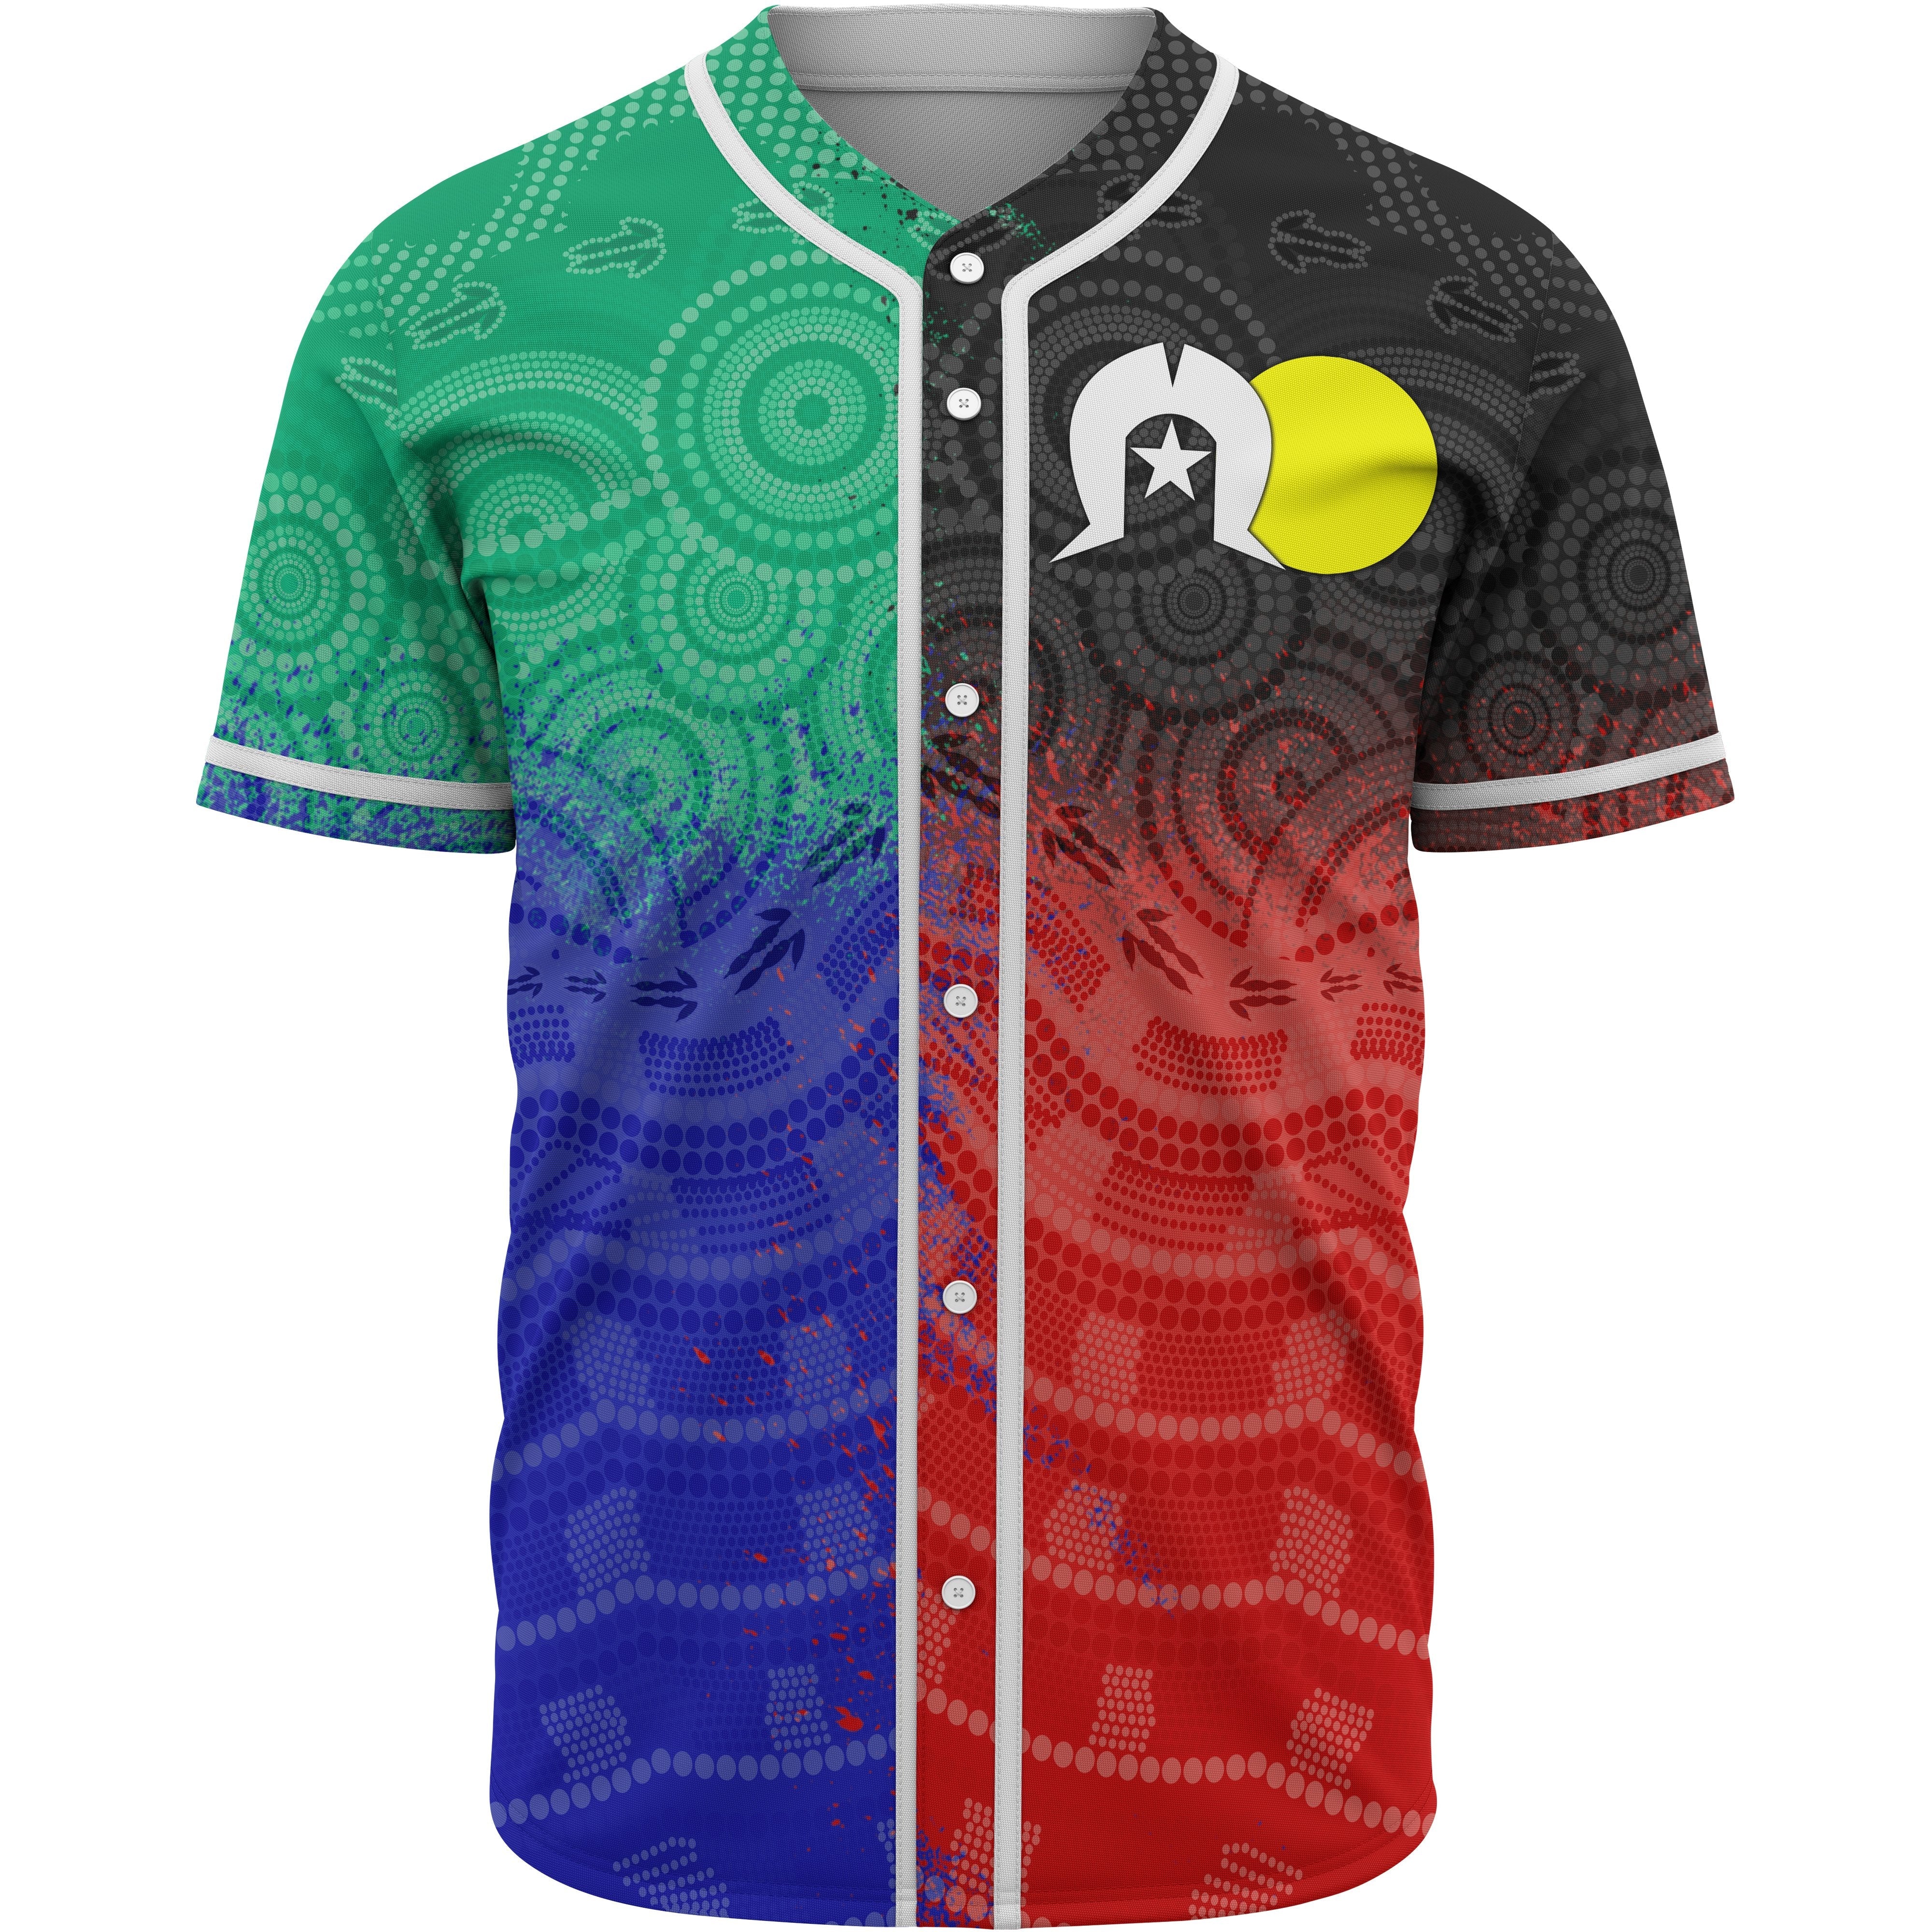 aboriginal-baseball-shirt-australia-naidoc-week-indigenous-flag-style